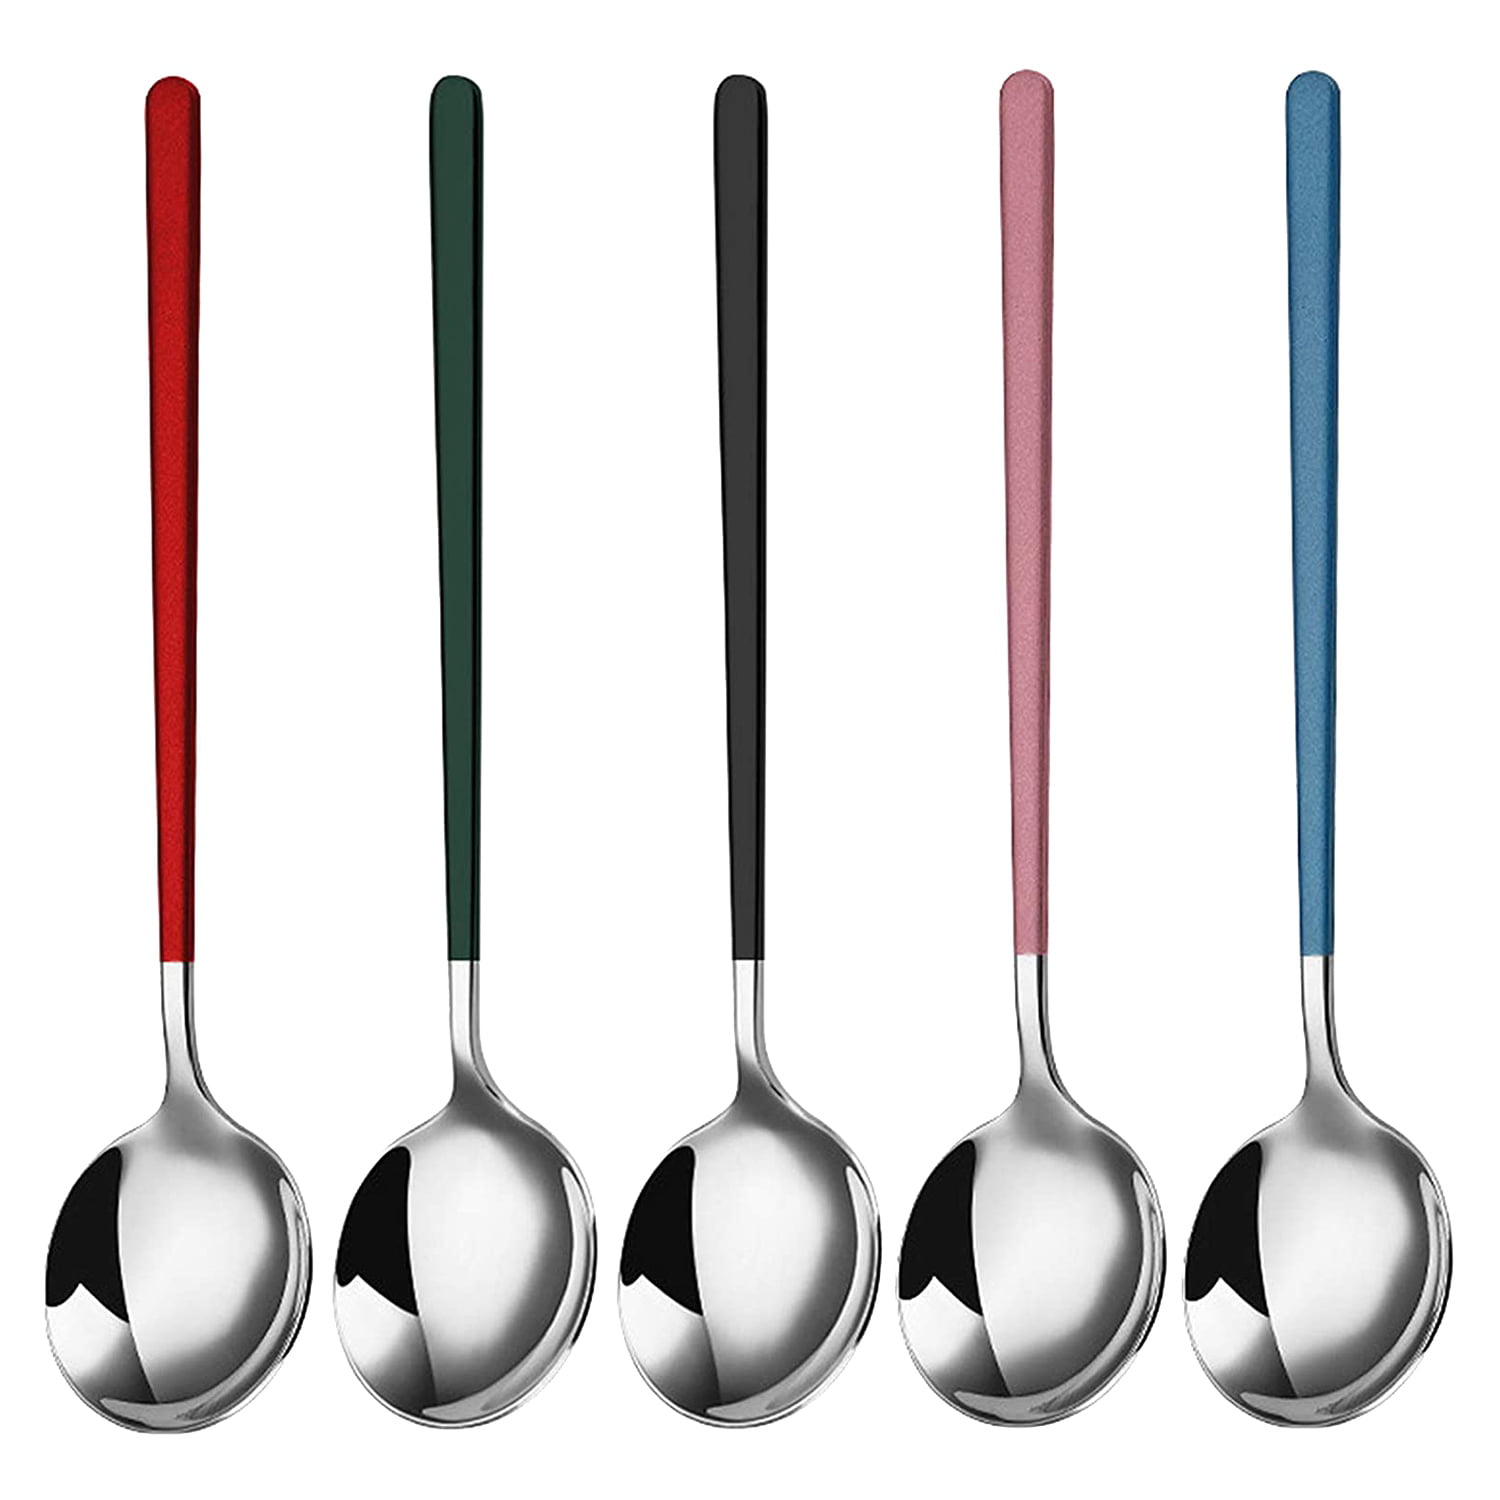 UPKOCH Soup Spoon 304 Stainless Steel Tea Salad Spoon Cat Coffee Spoon for Kitchen Dinner Black 